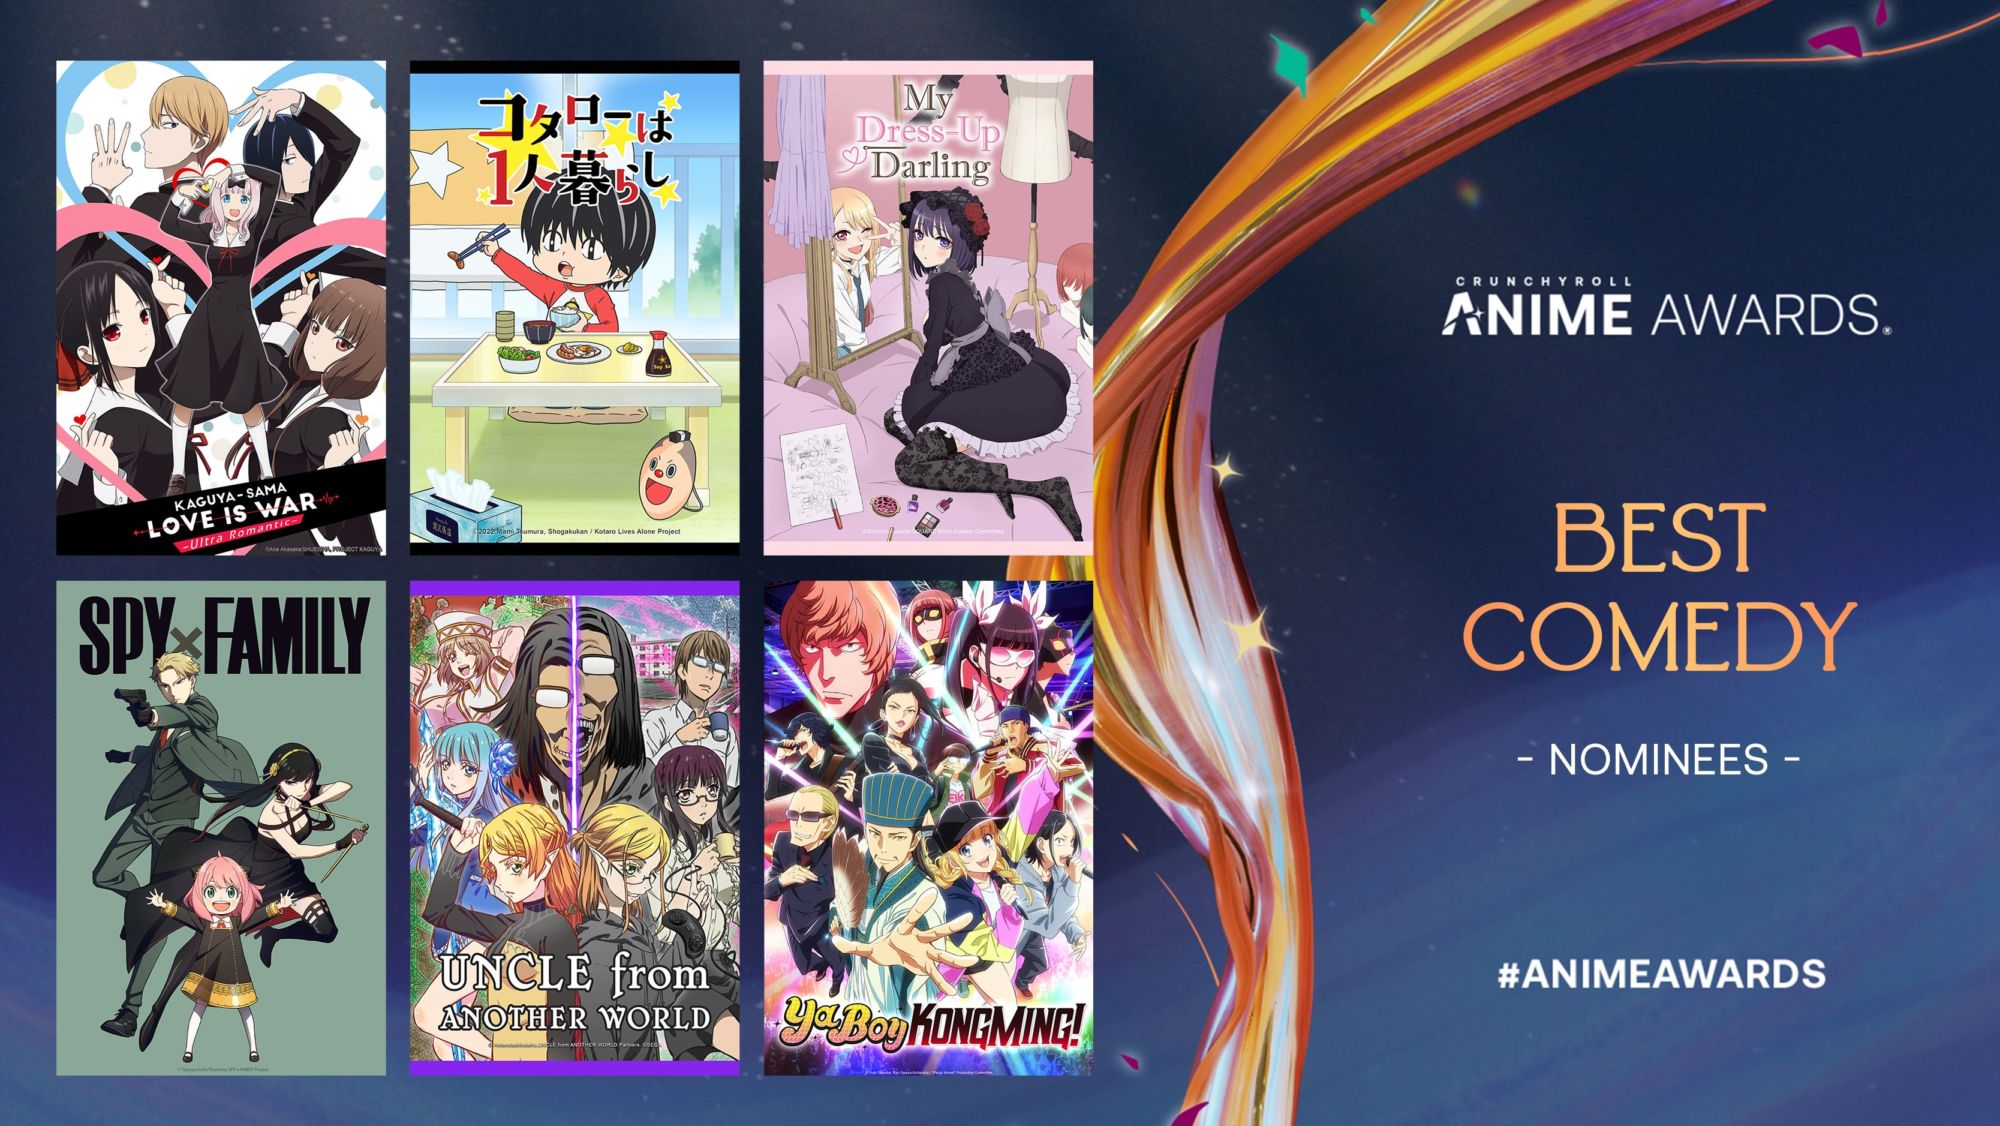 Stream episode S1 E4 Crunchyroll Anime Awards by GeekStudioz